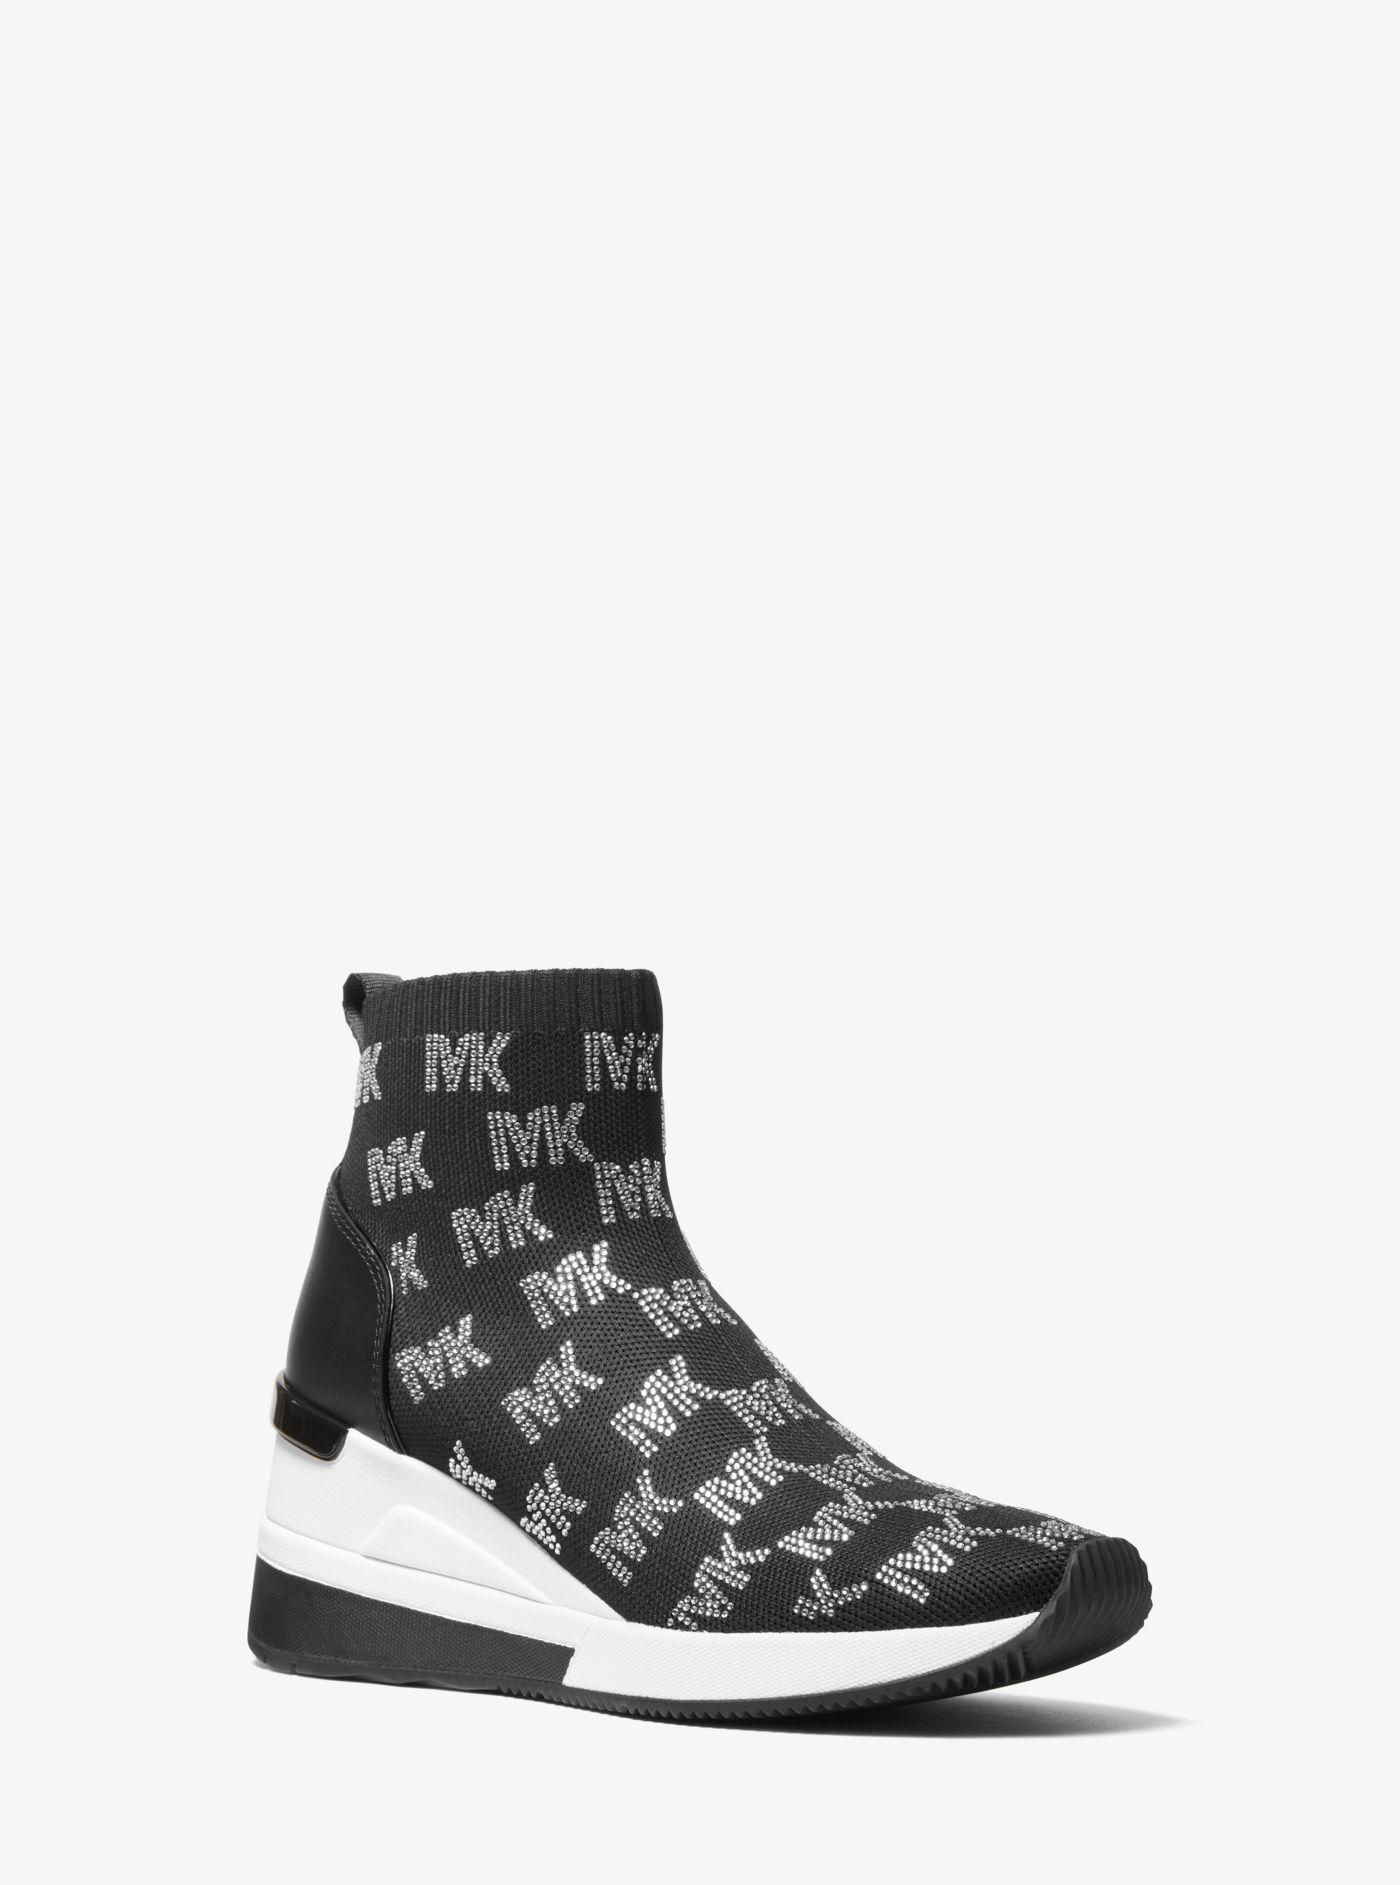 Michael Kors Skyler Embellished Stretch Knit Sock Sneaker in White | Lyst